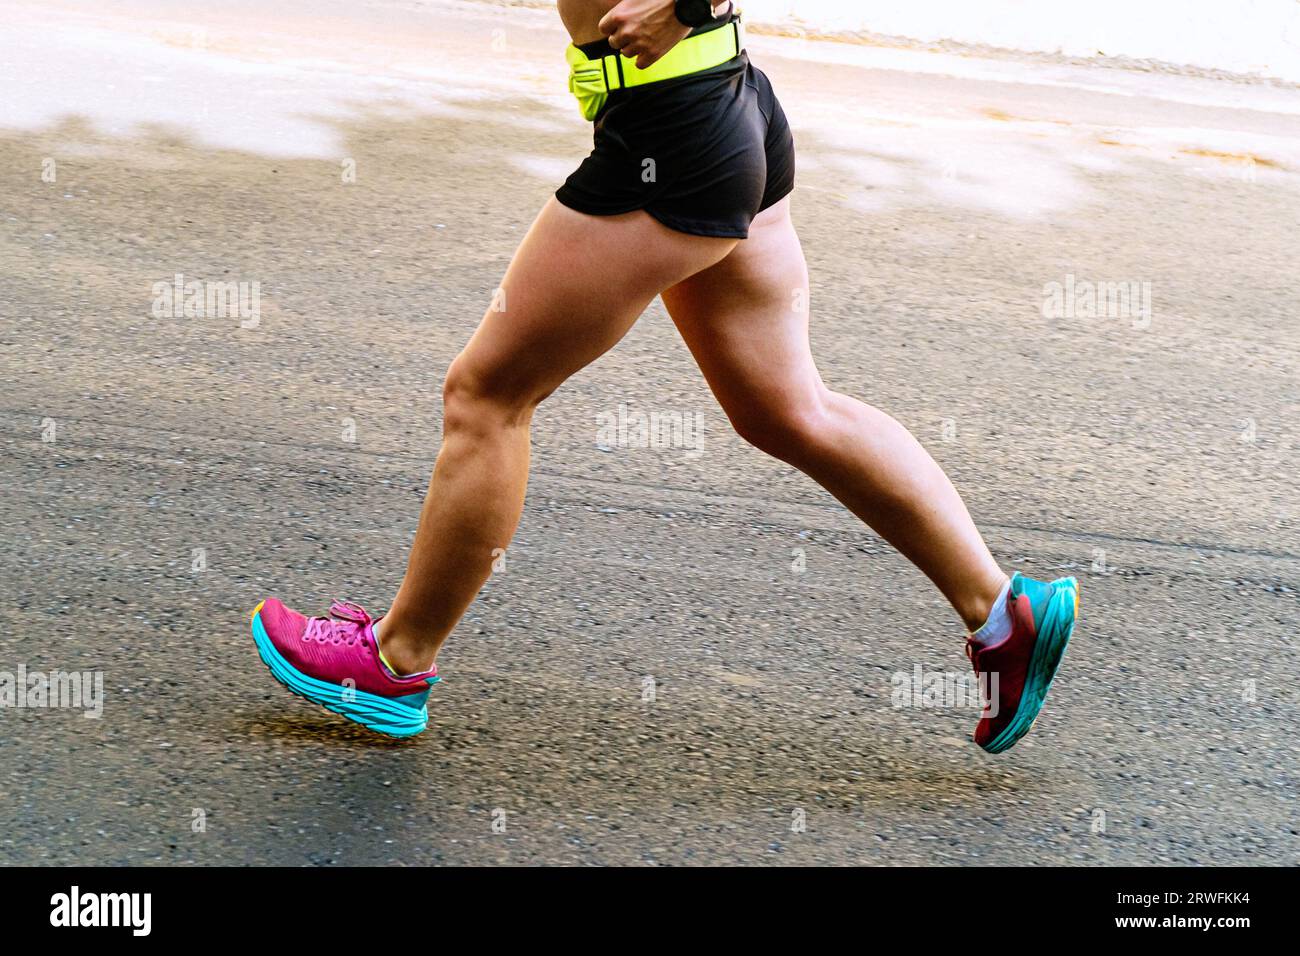 close-up legs female runner running on asphalt road marathon race Stock Photo